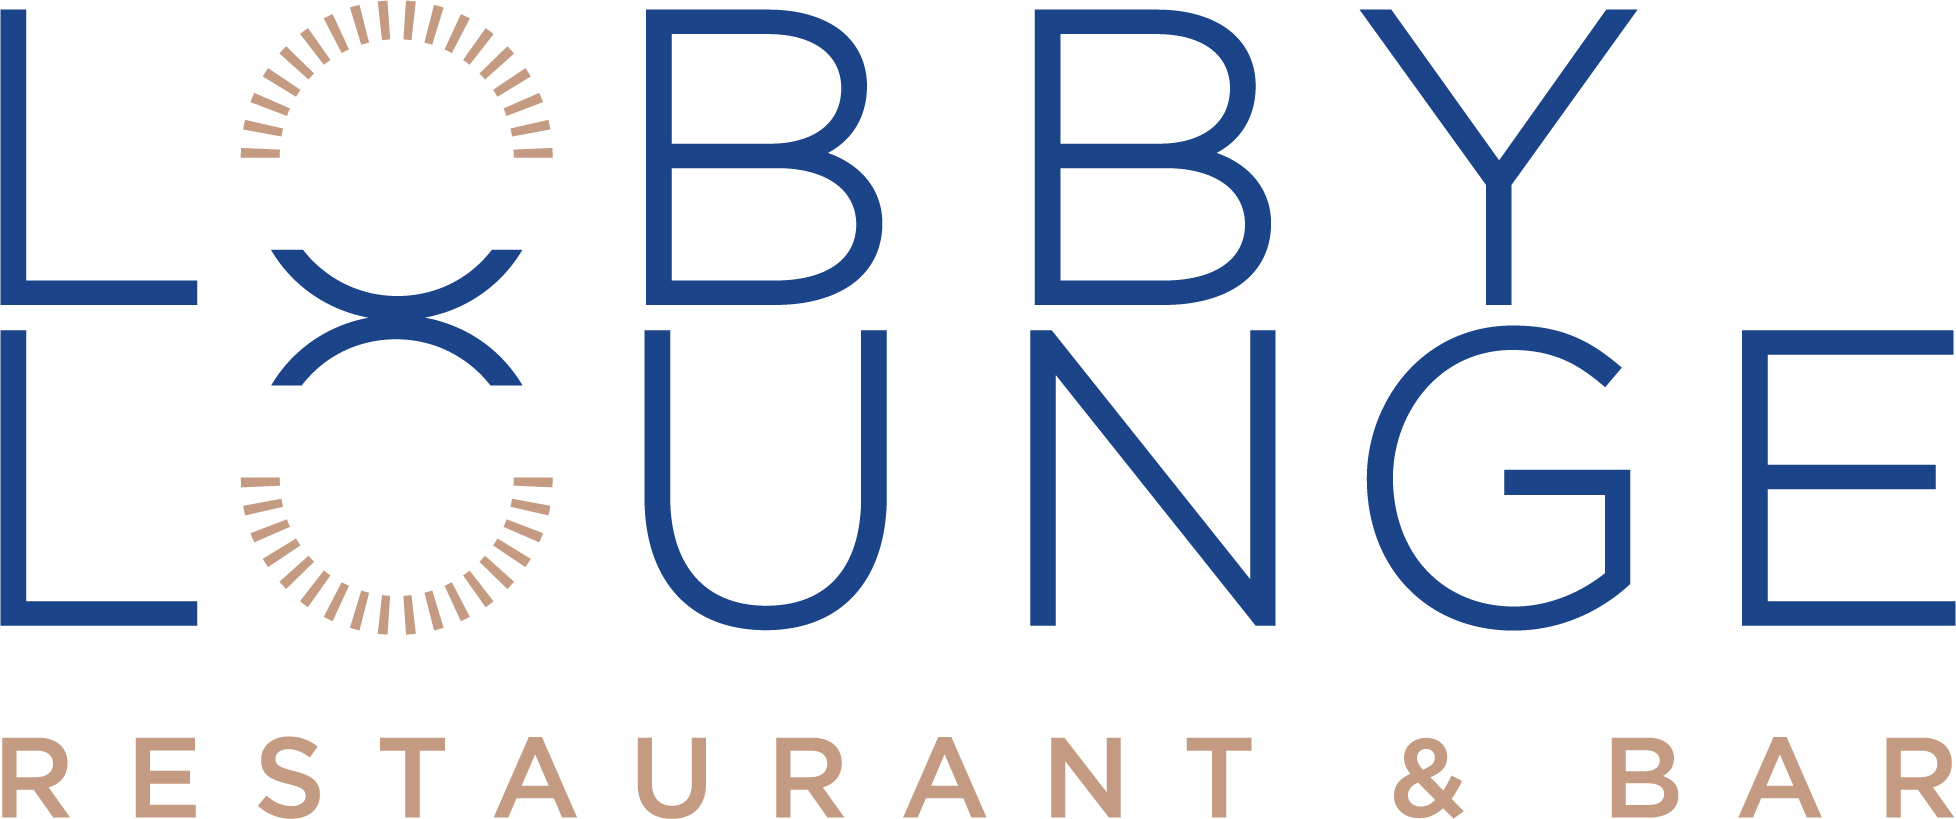 Lobby Lounge Restaurant & BarLogo of 